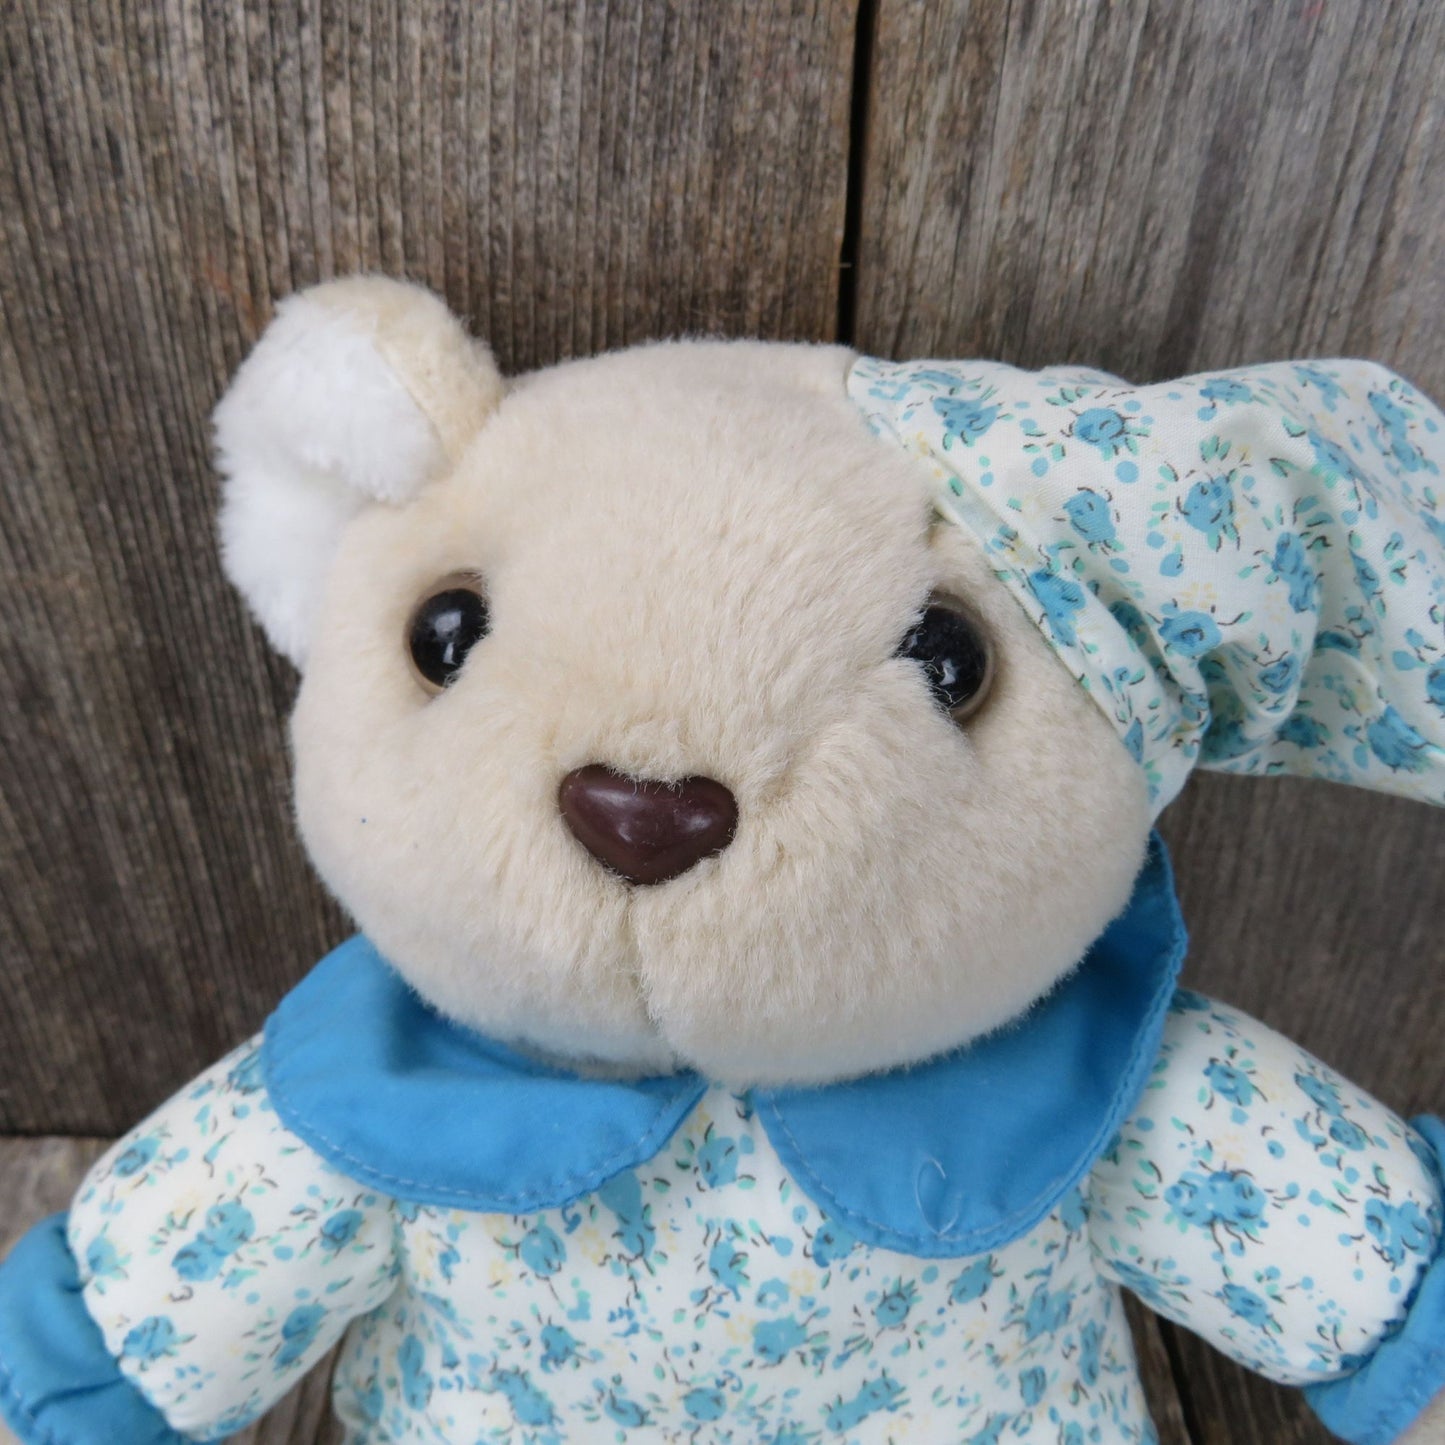 Teddy Bear Plush in Pajamas Tan Blue Flowers Nightcap Brown Plastic Nose Stuffed Animal